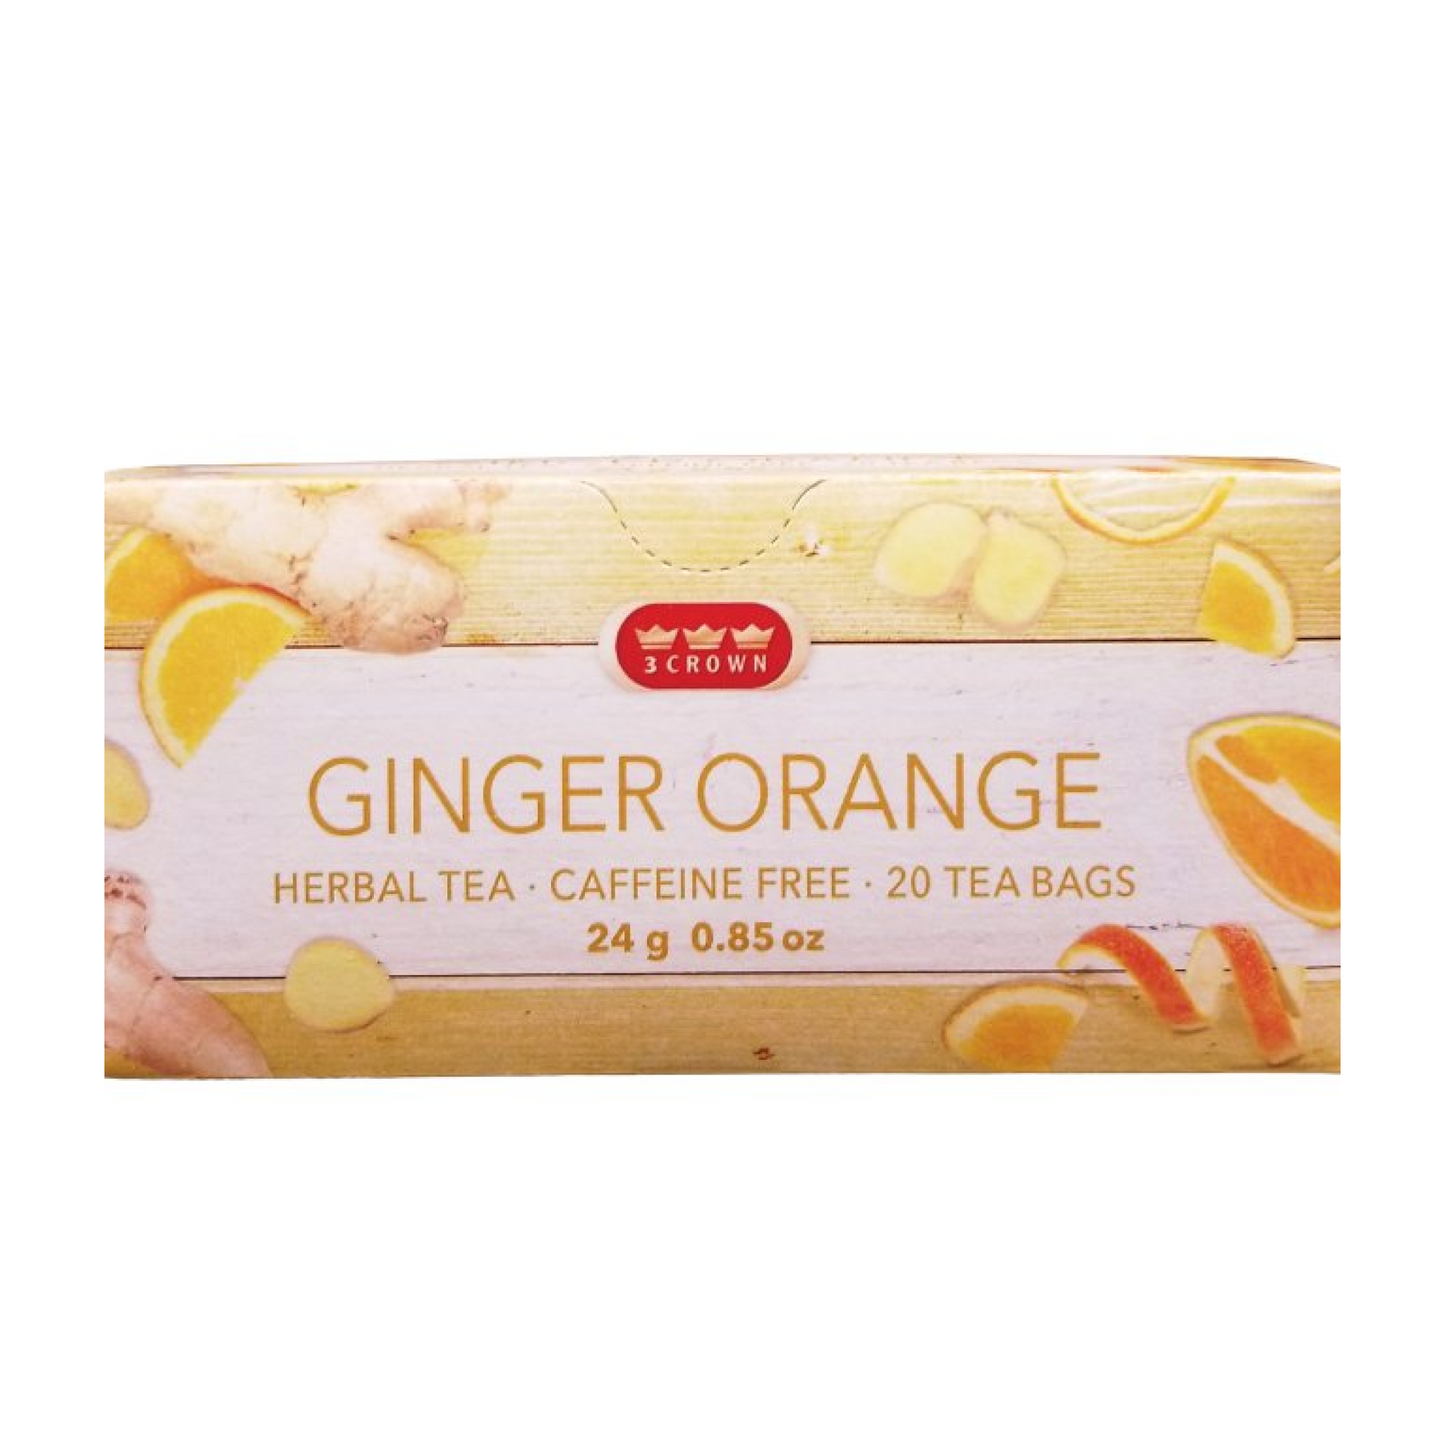 3 Crown Ginger Orange Herbal Tea  24g